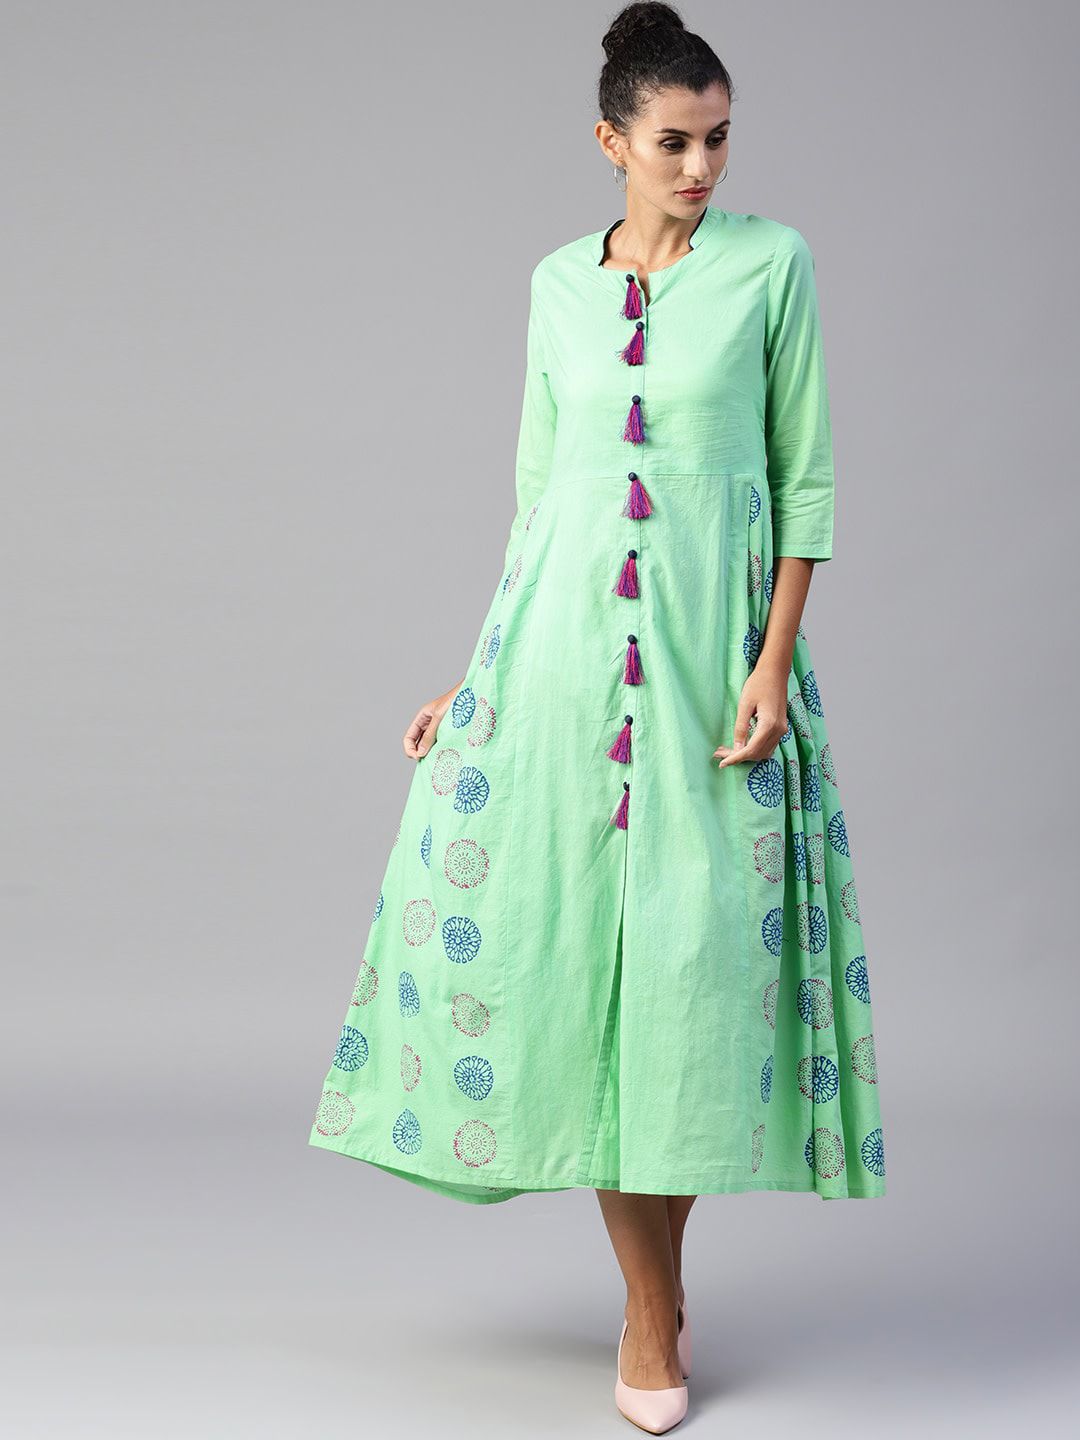 Tulsattva Women Green Printed A-Line Dress Price in India